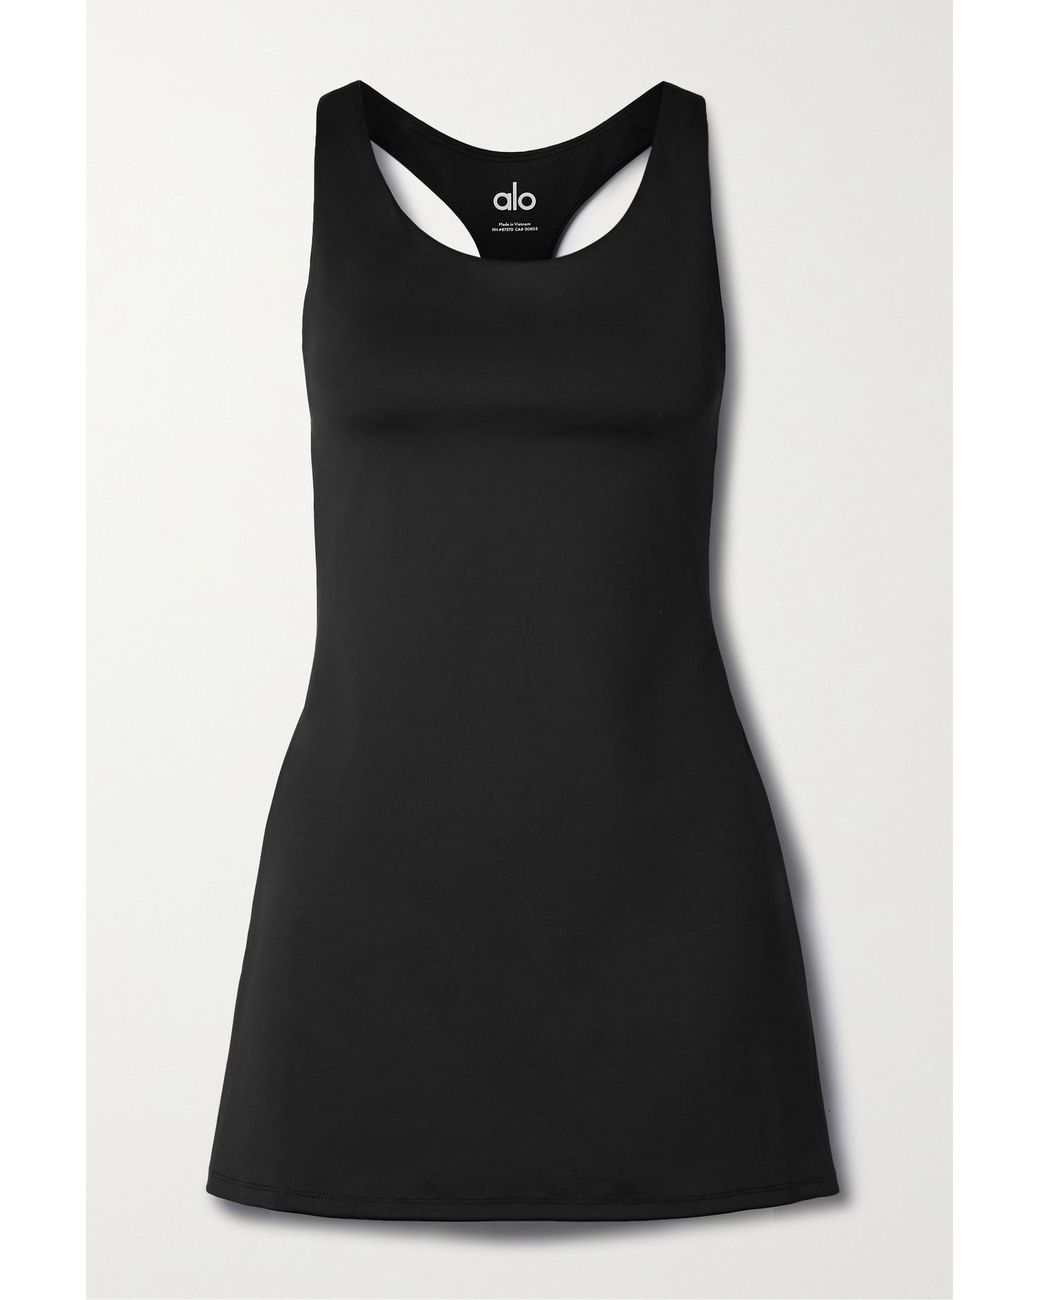 Alo Yoga Airlift Tennis Dress in Black